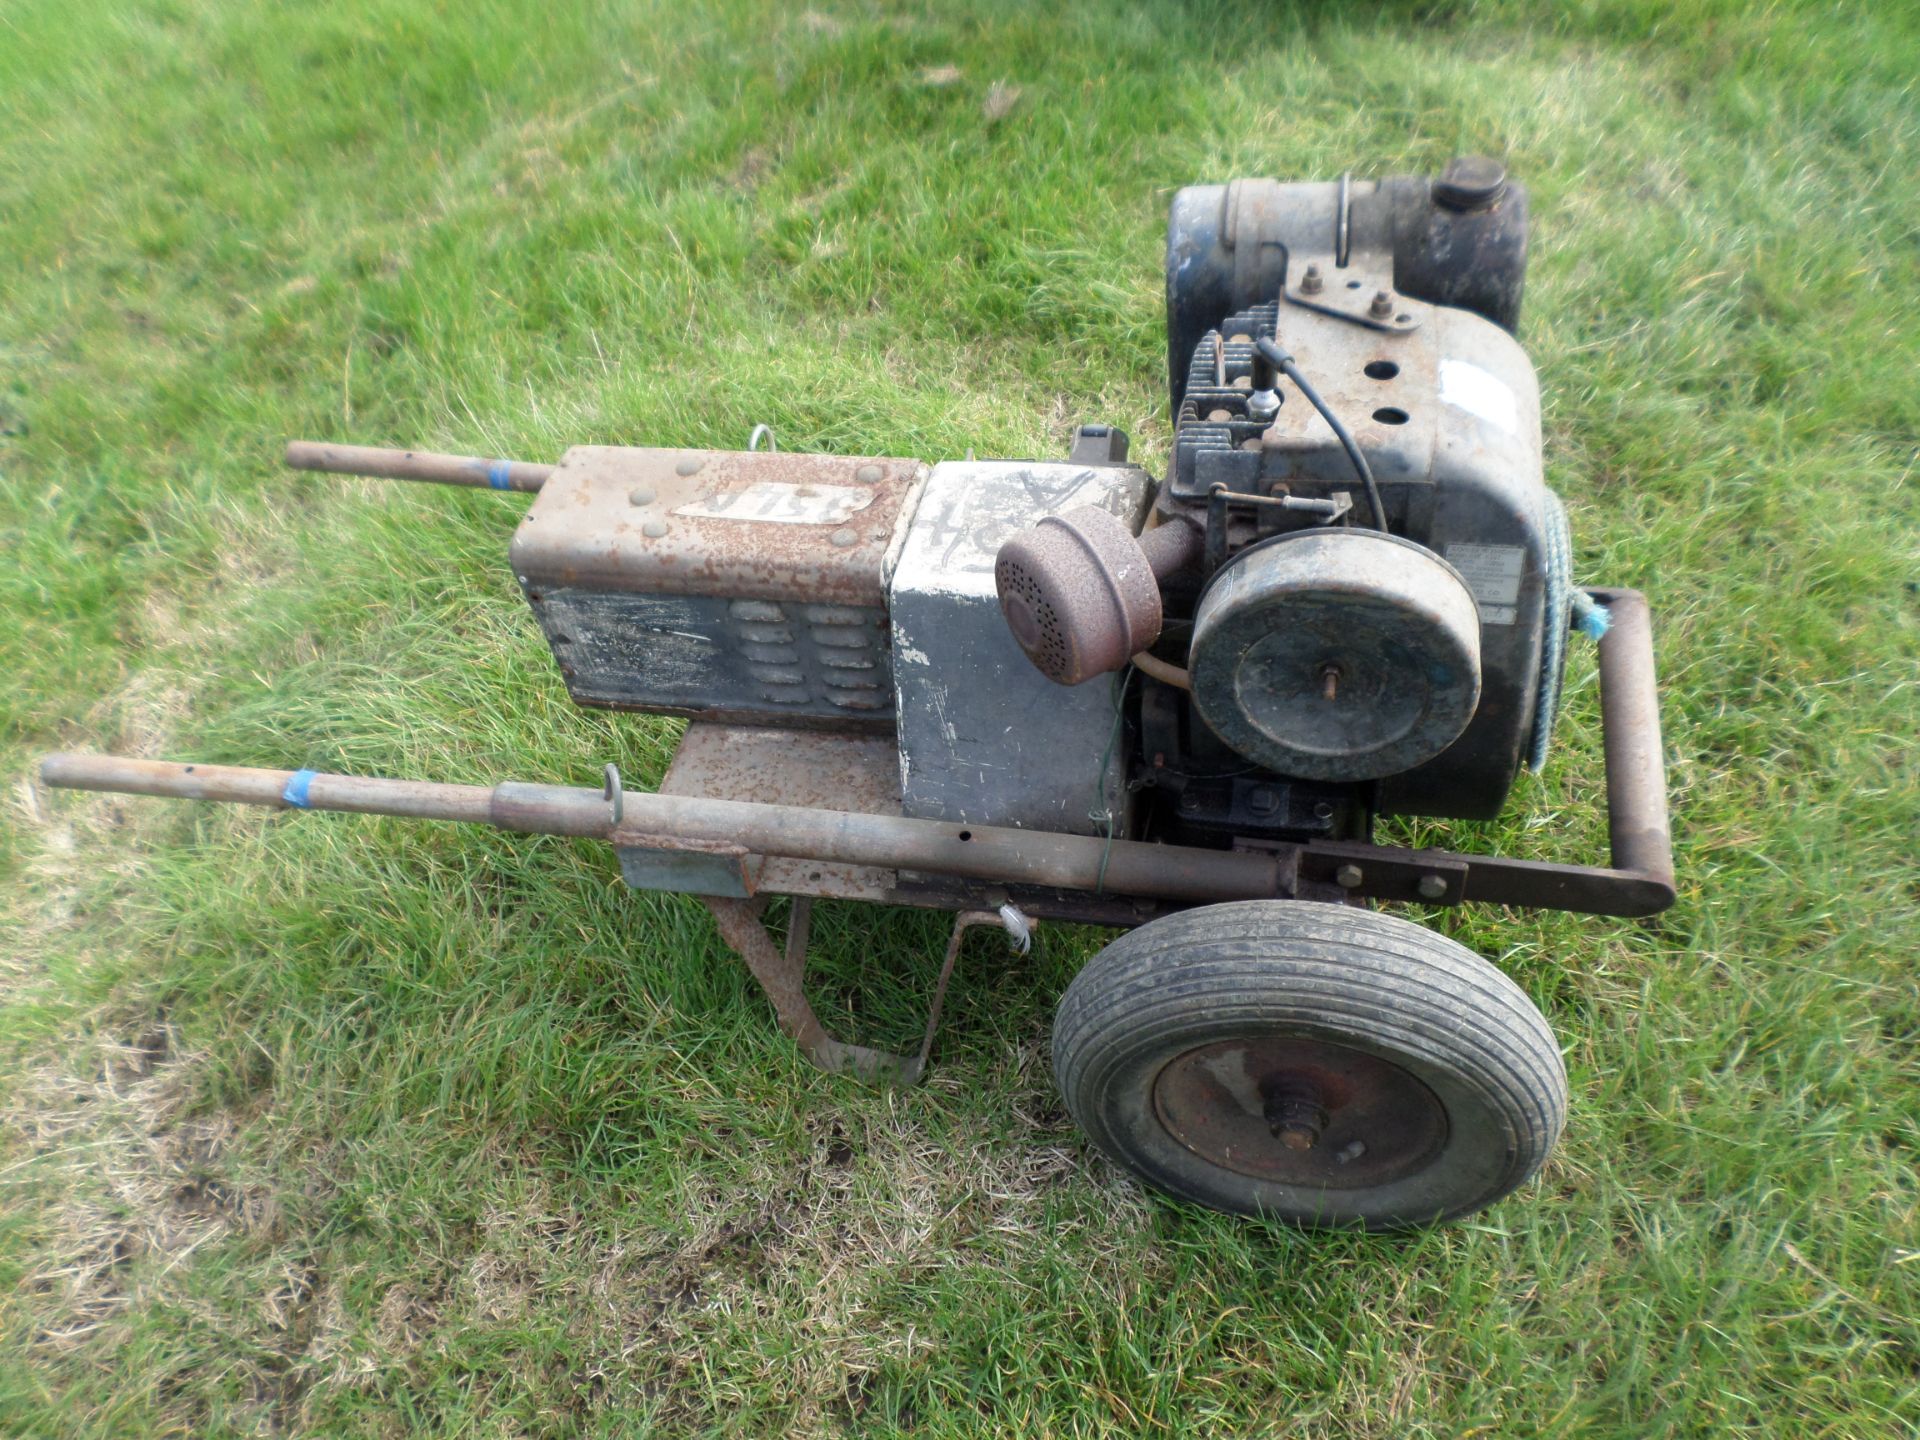 Vintage petrol generator